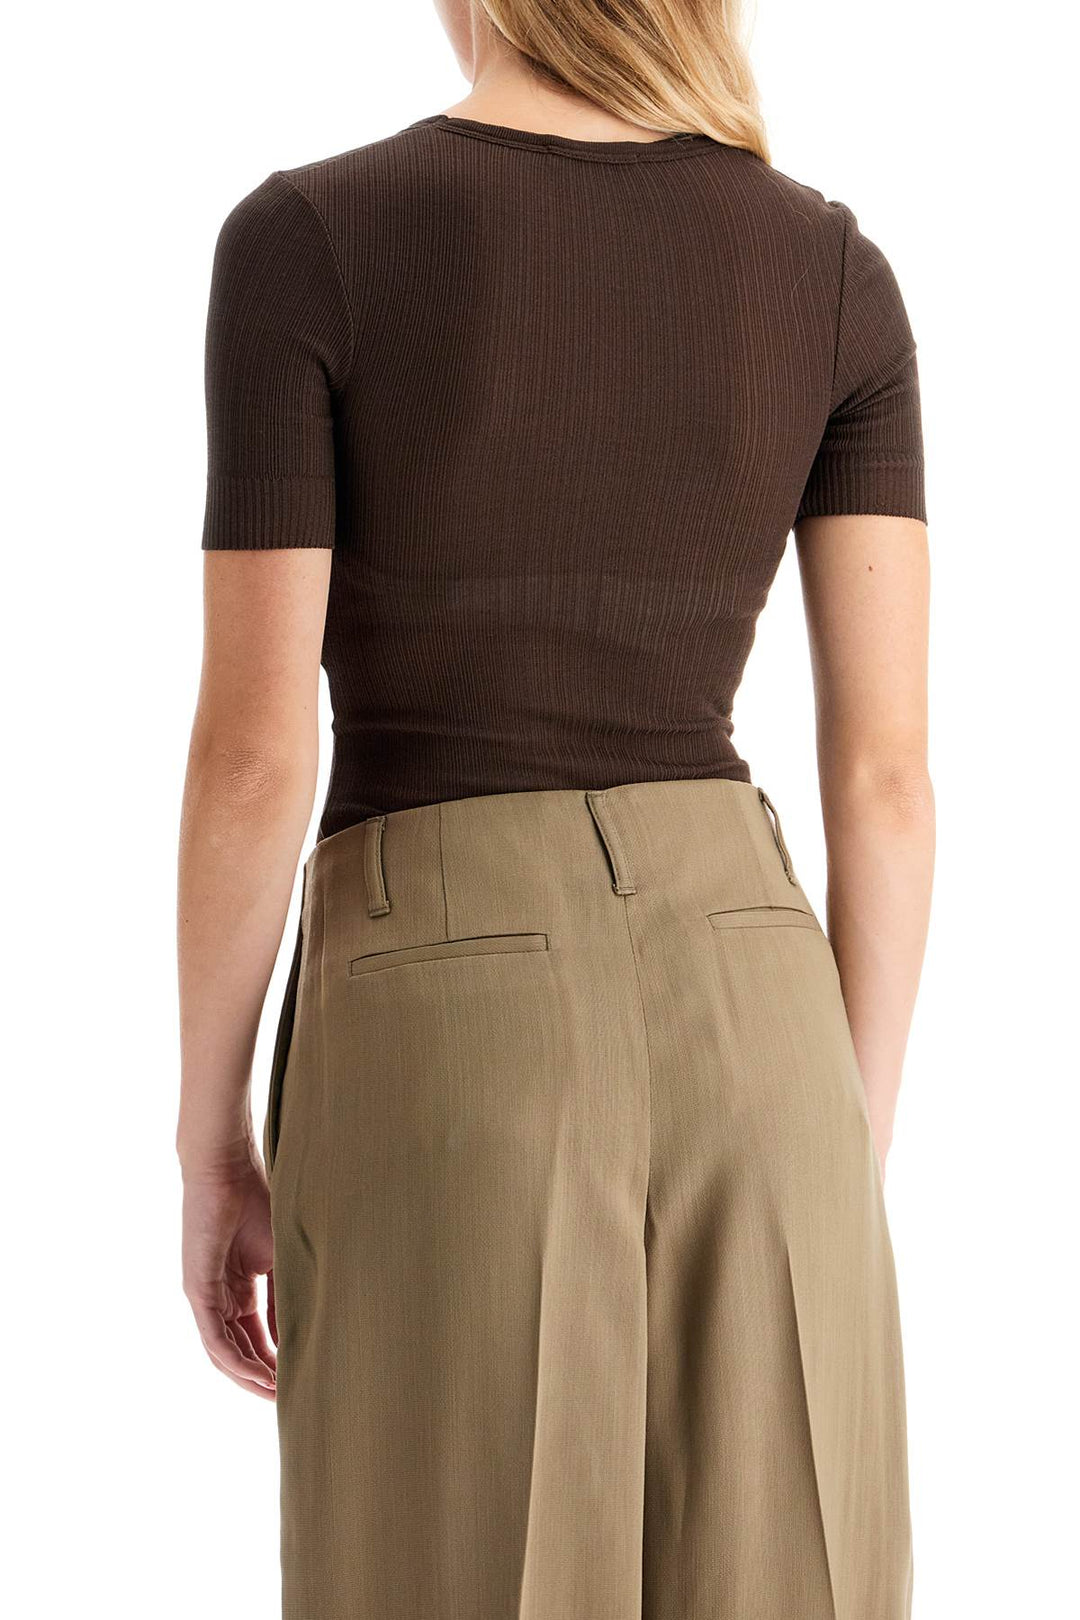 Lemaire Short Sleeved Lightweight Knit Body For Men   Brown